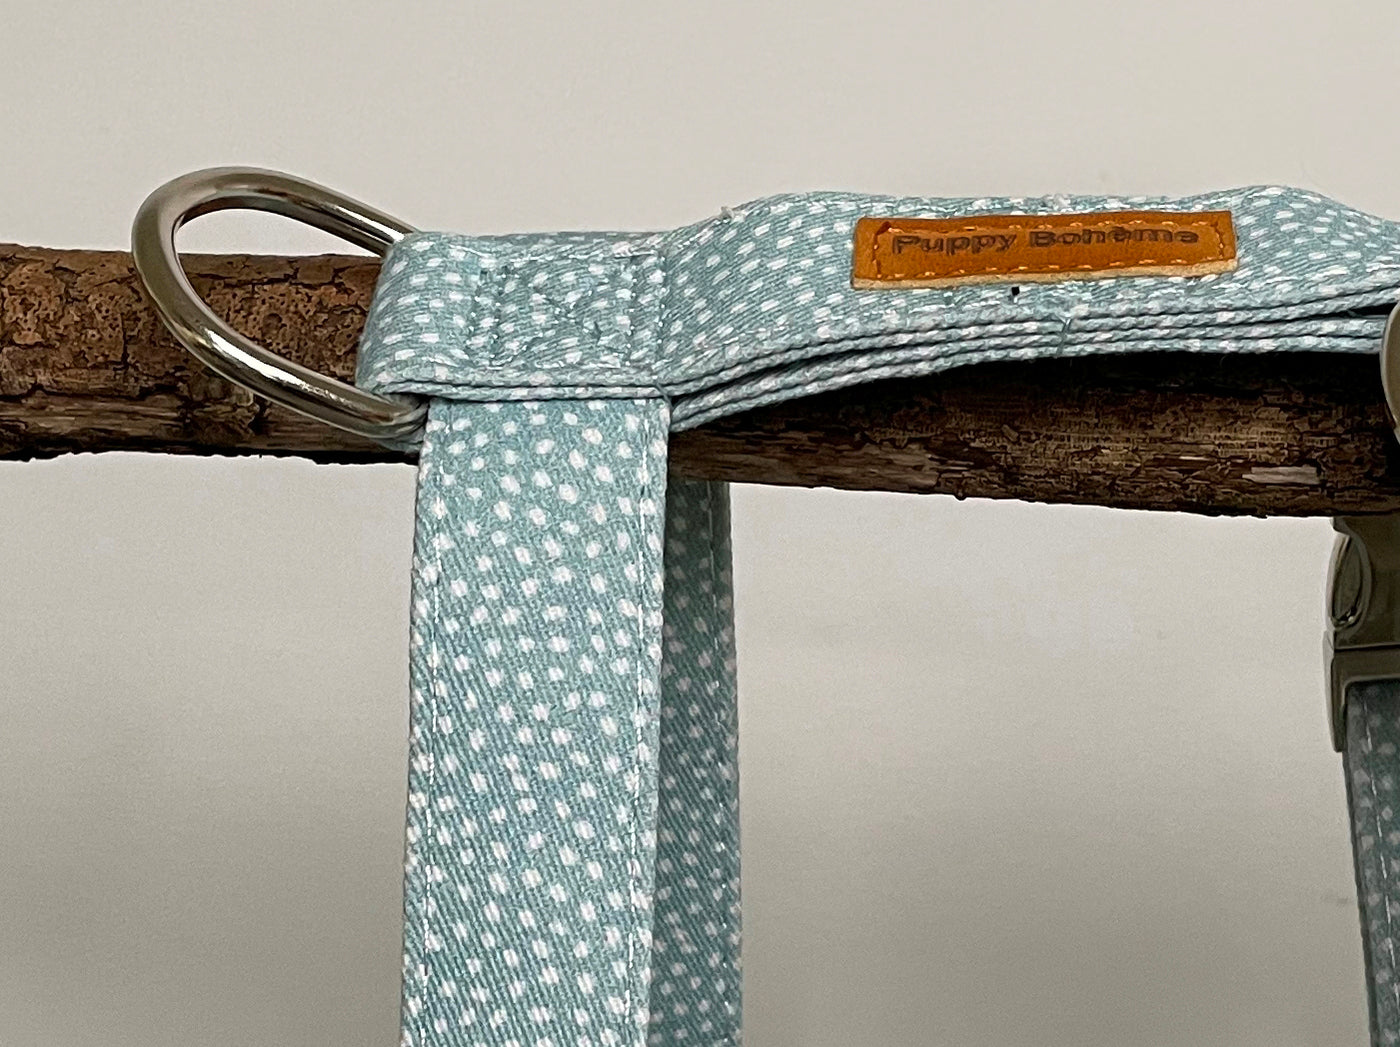 Minty strap-harness